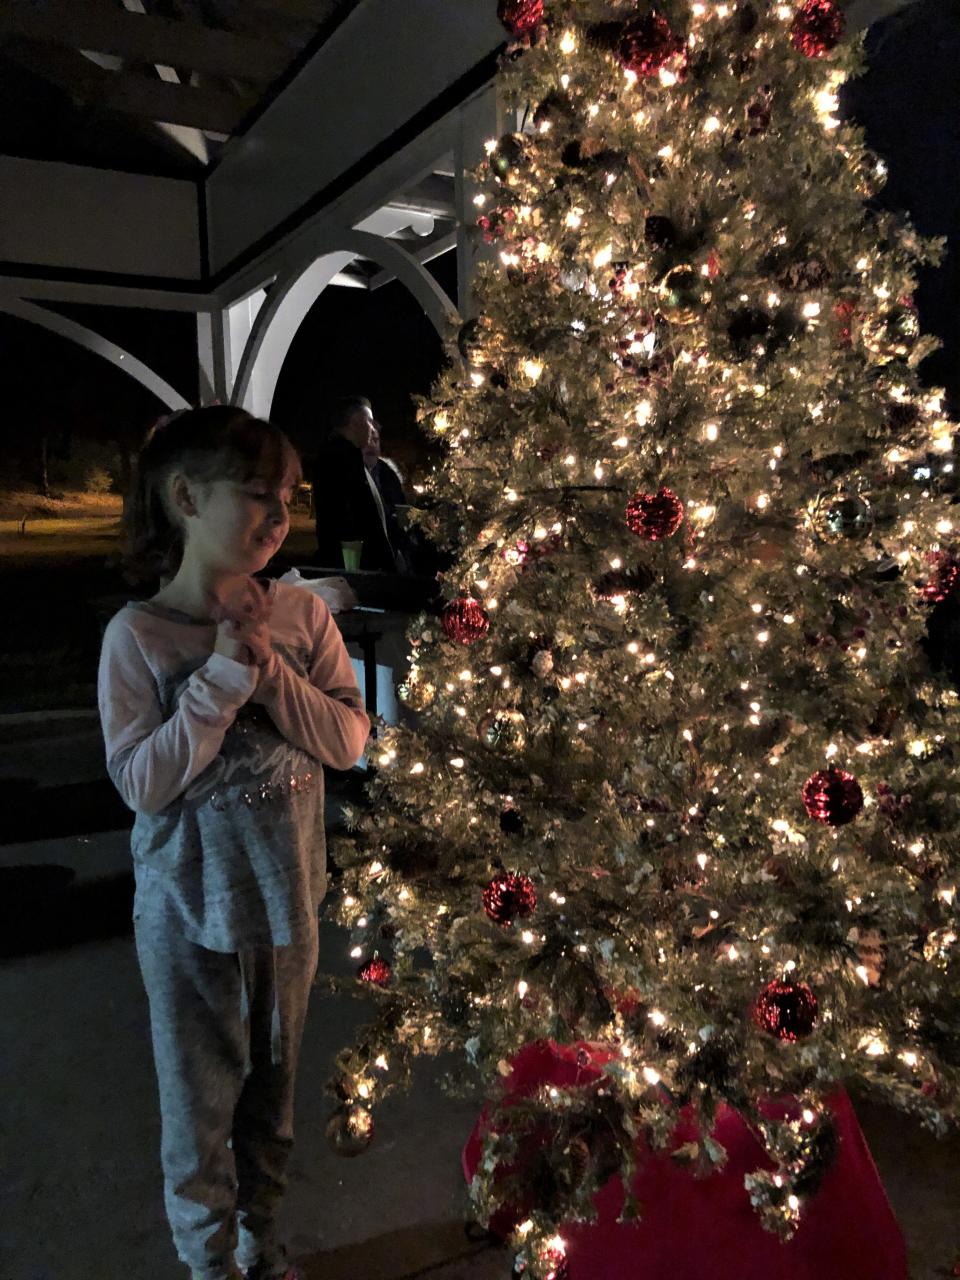 Amelia Houston admires the Fountain City Park Christmas tree in December 2019.